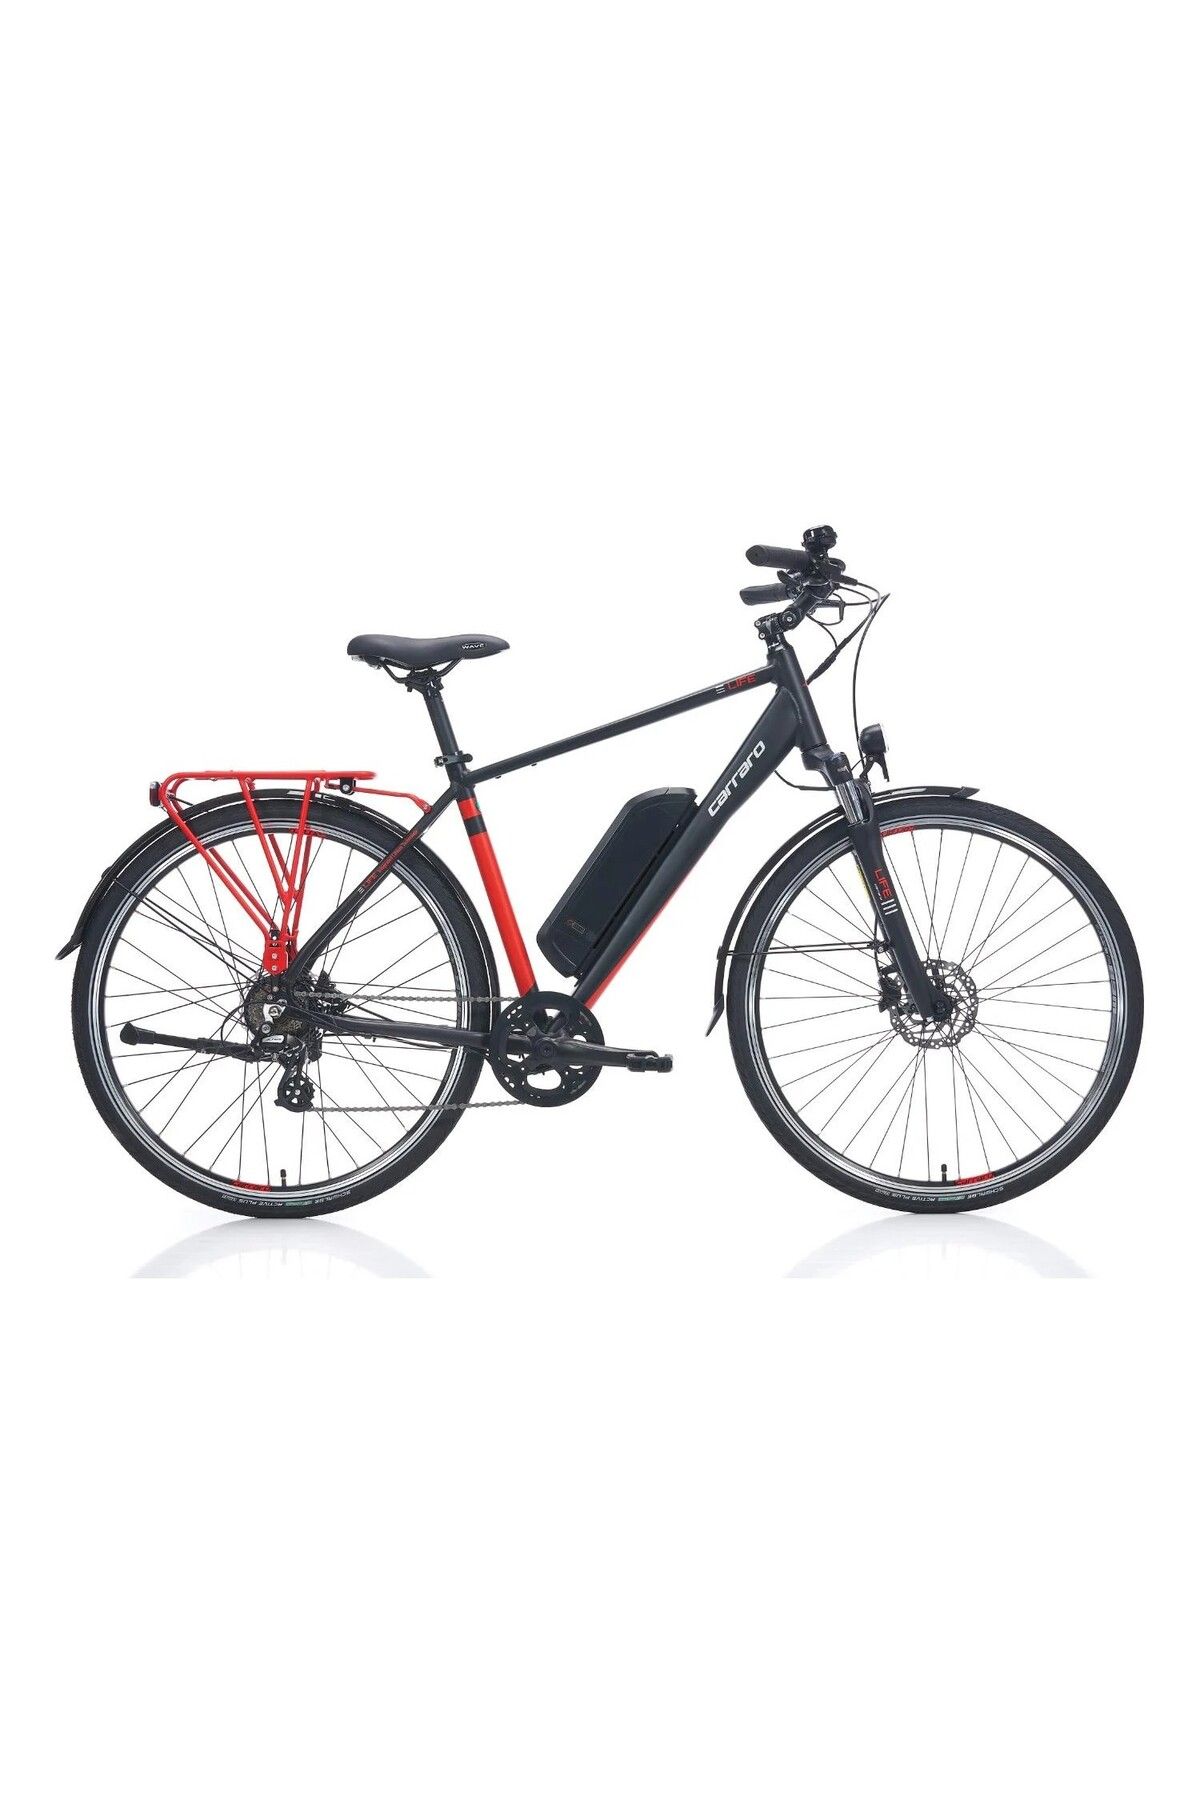 Carraro E line E life Elektrikli bisiklet Siyah kırmızı 52 kadro